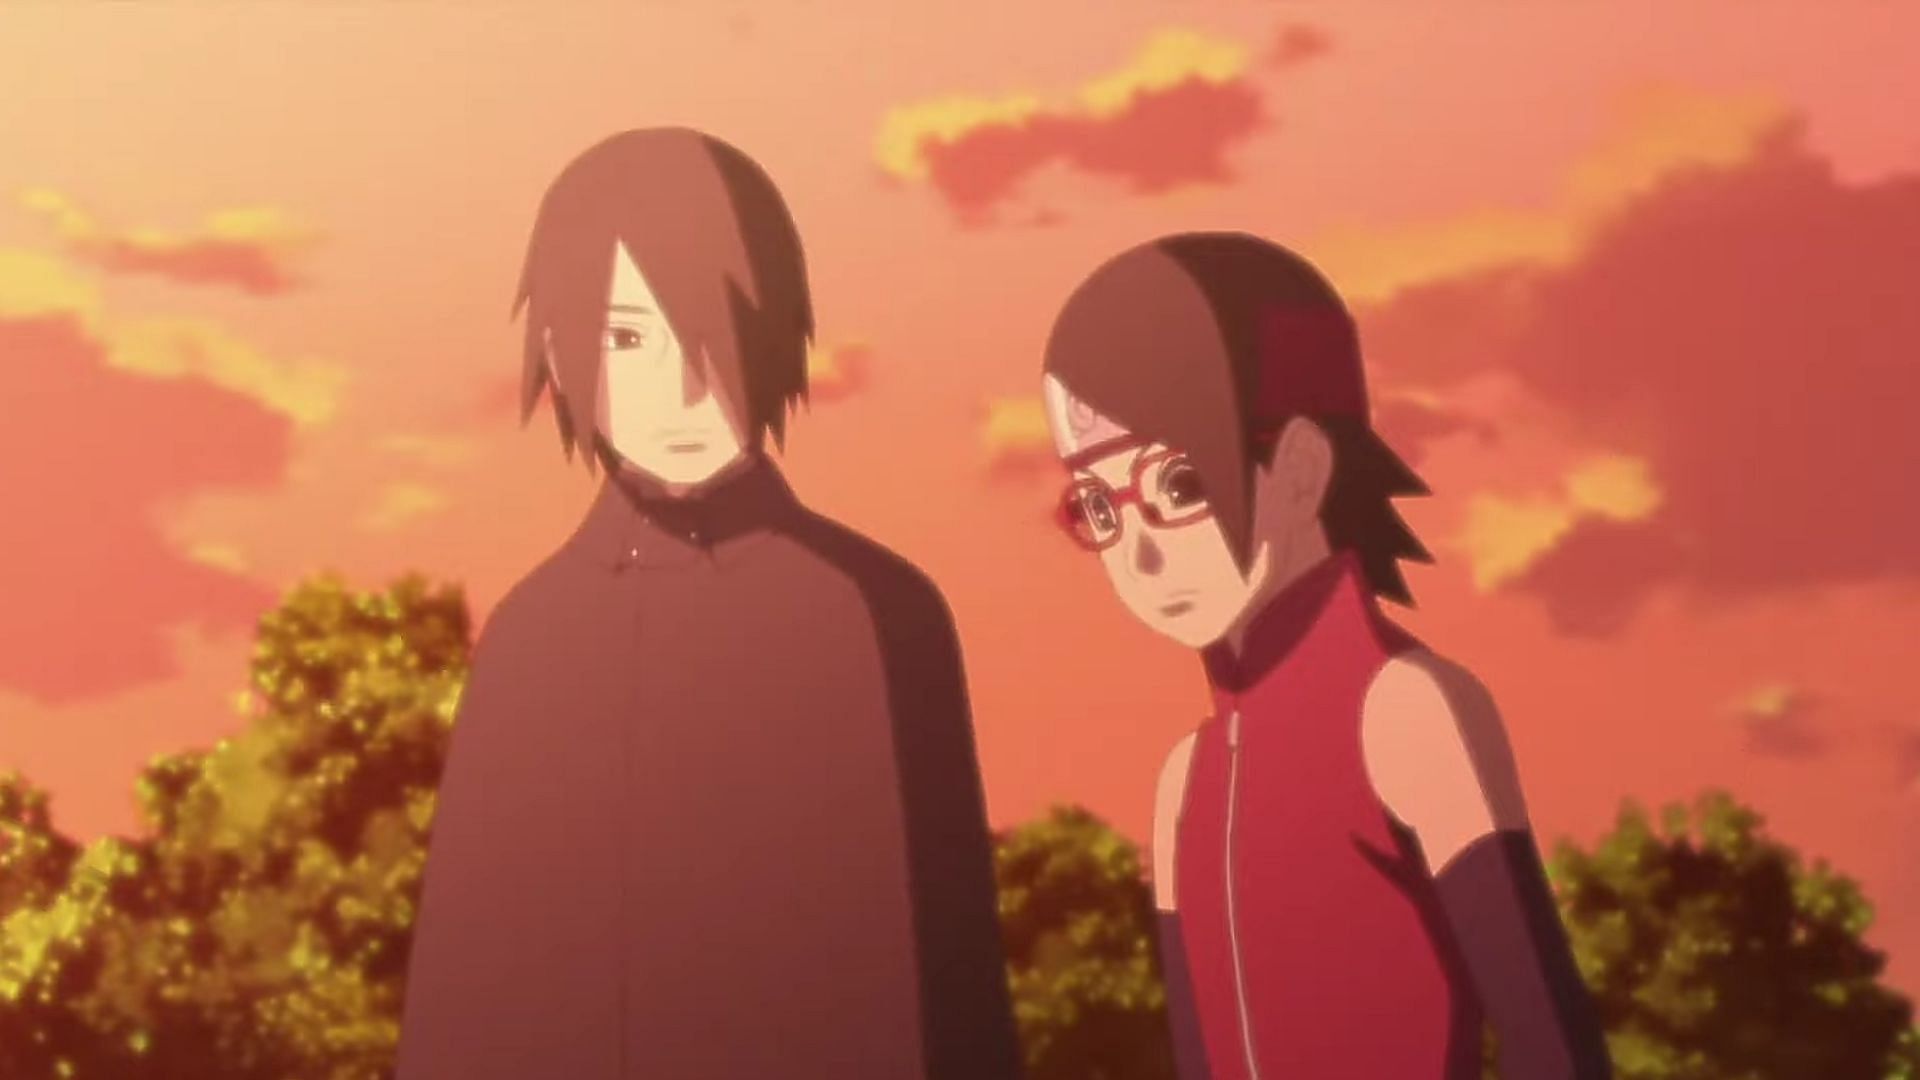 Sasuke Uchiha and Sarada as seen in the Boruto anime (Image via Studio Pierrot)